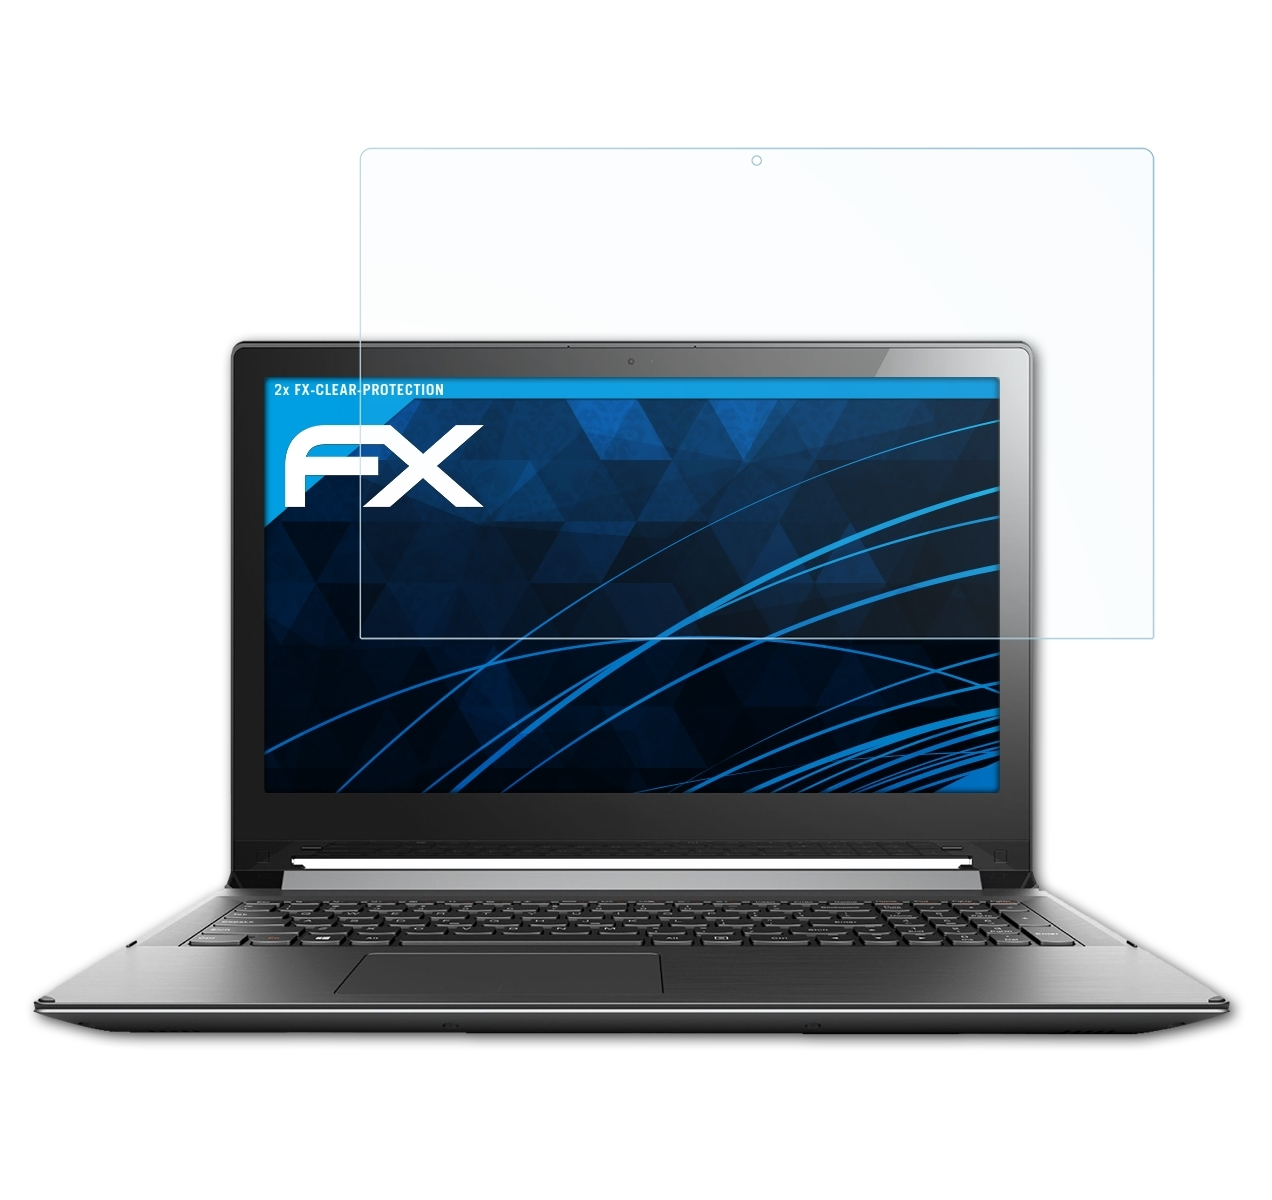 FX-Clear ATFOLIX Lenovo Displayschutz(für 2x Flex 2-15) IdeaPad